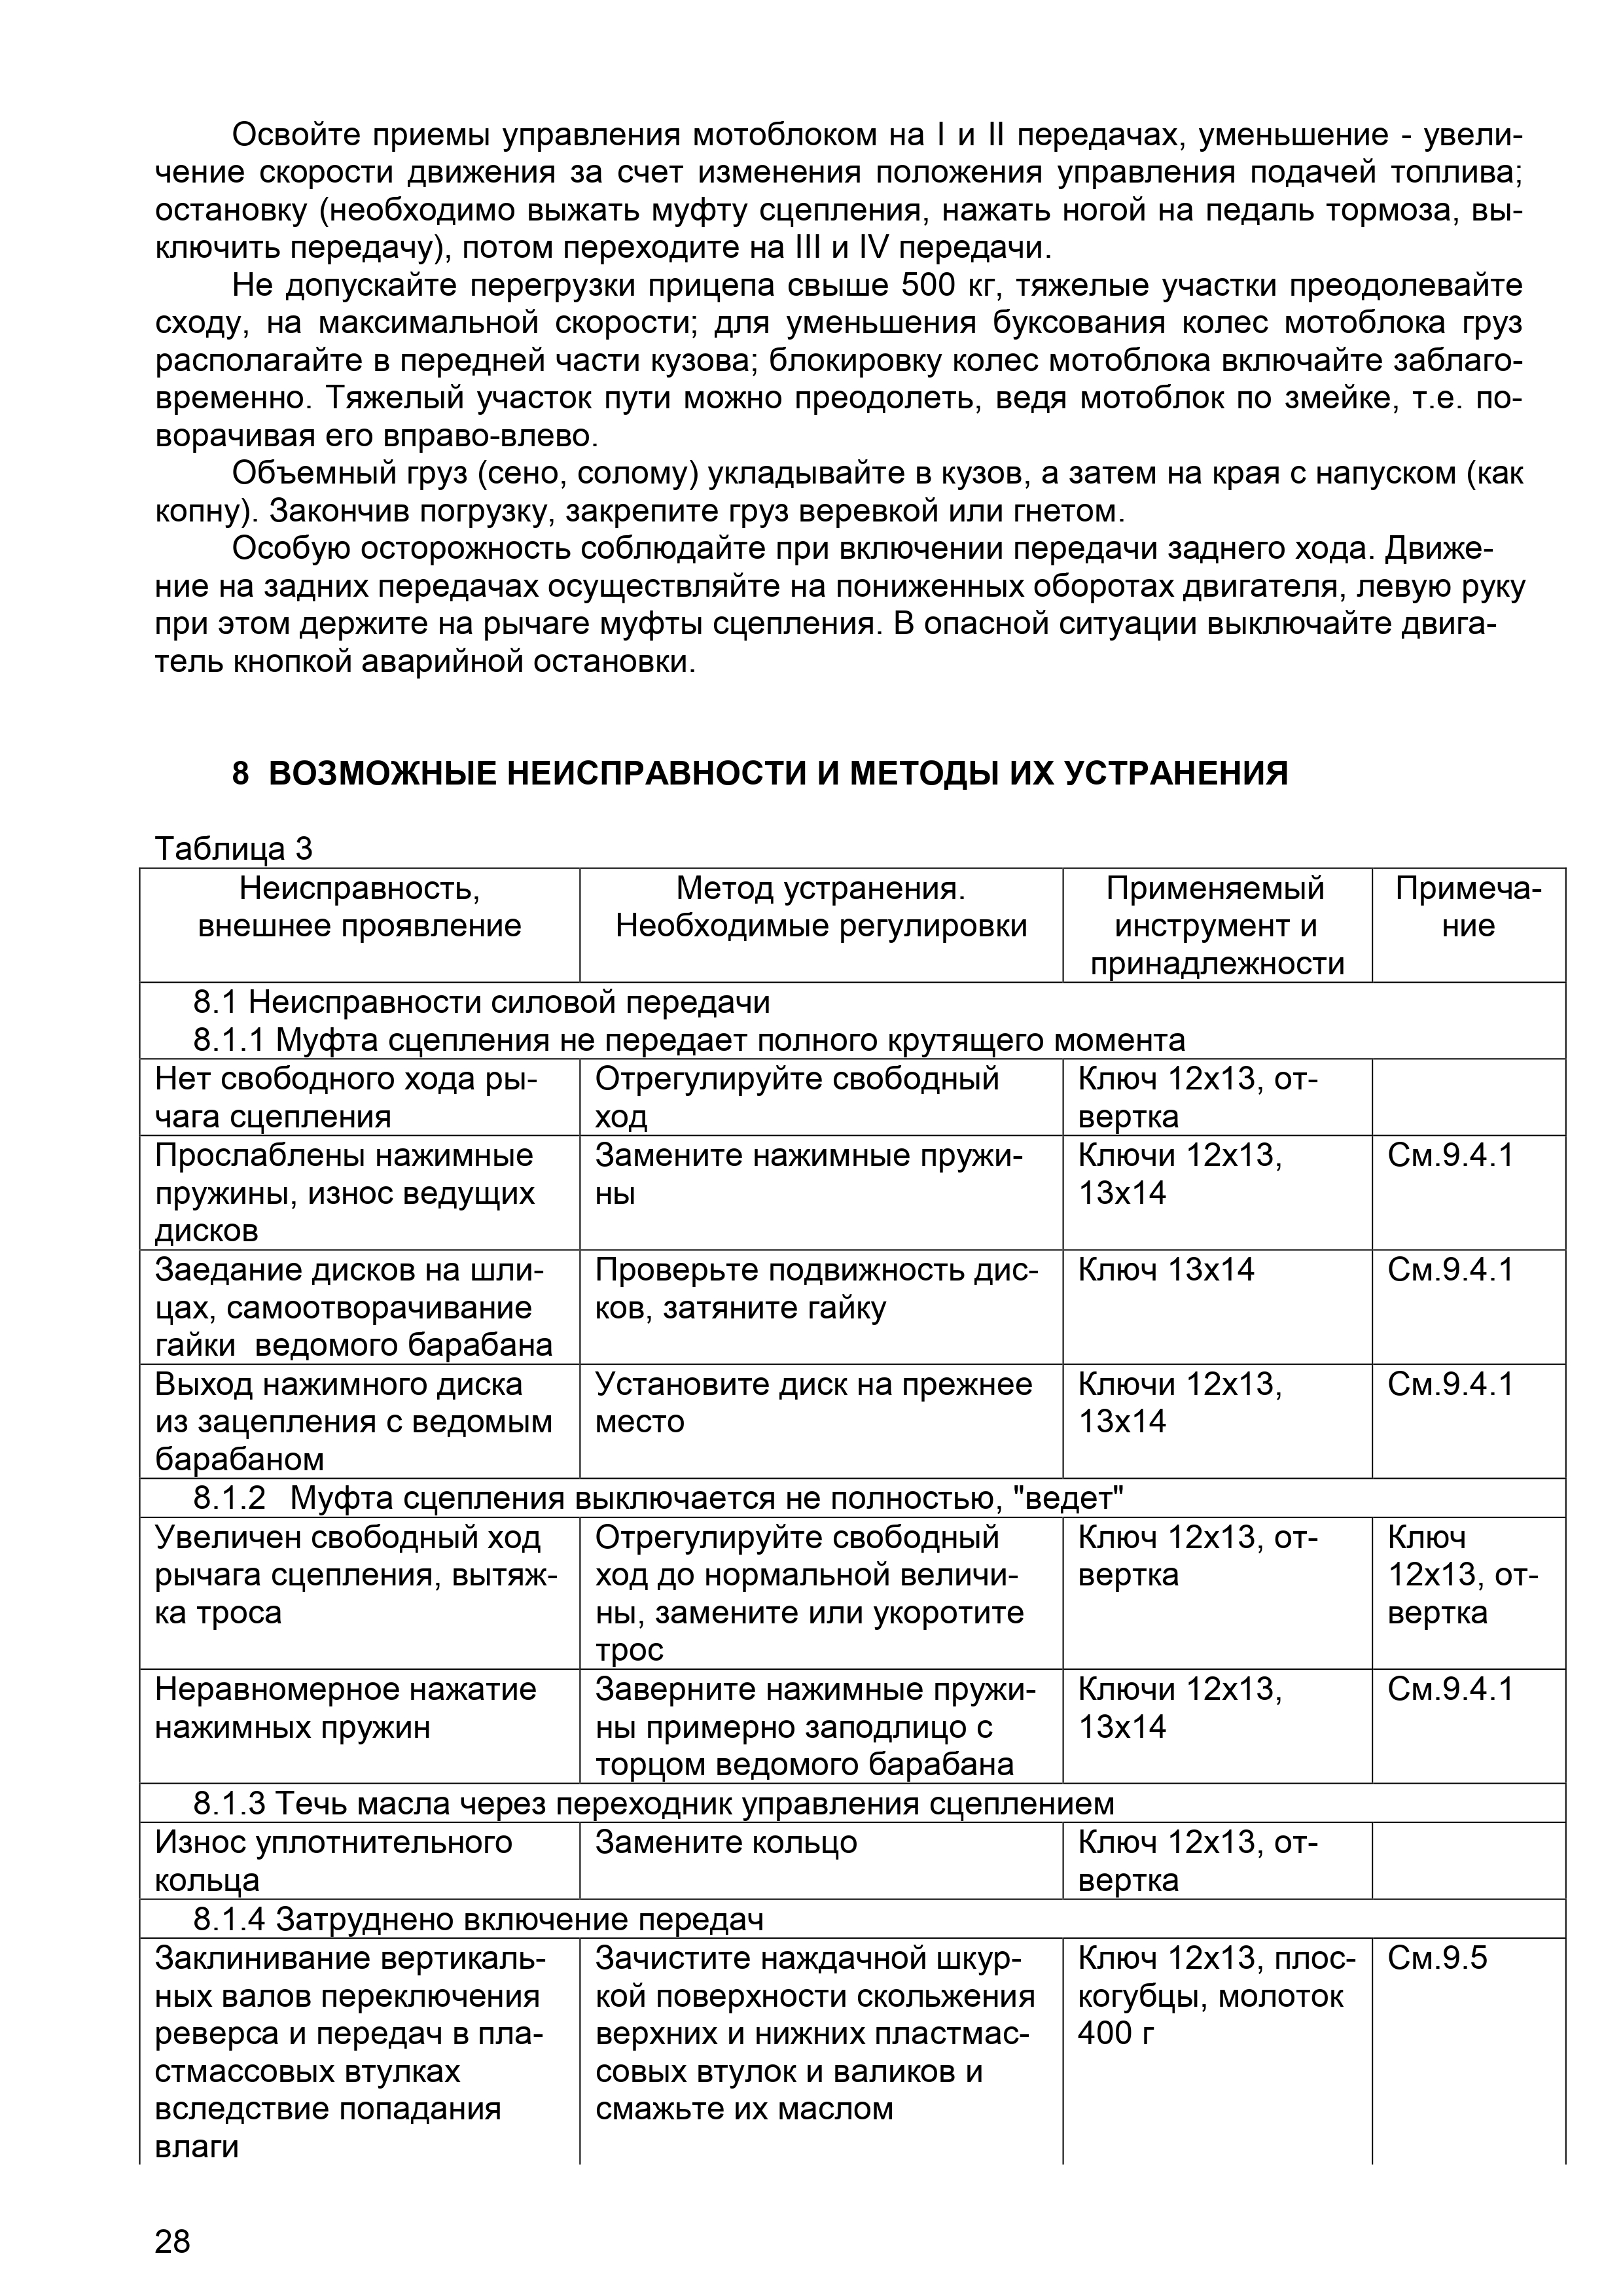 belarus_09h_manual i catalog (1)_page-0028